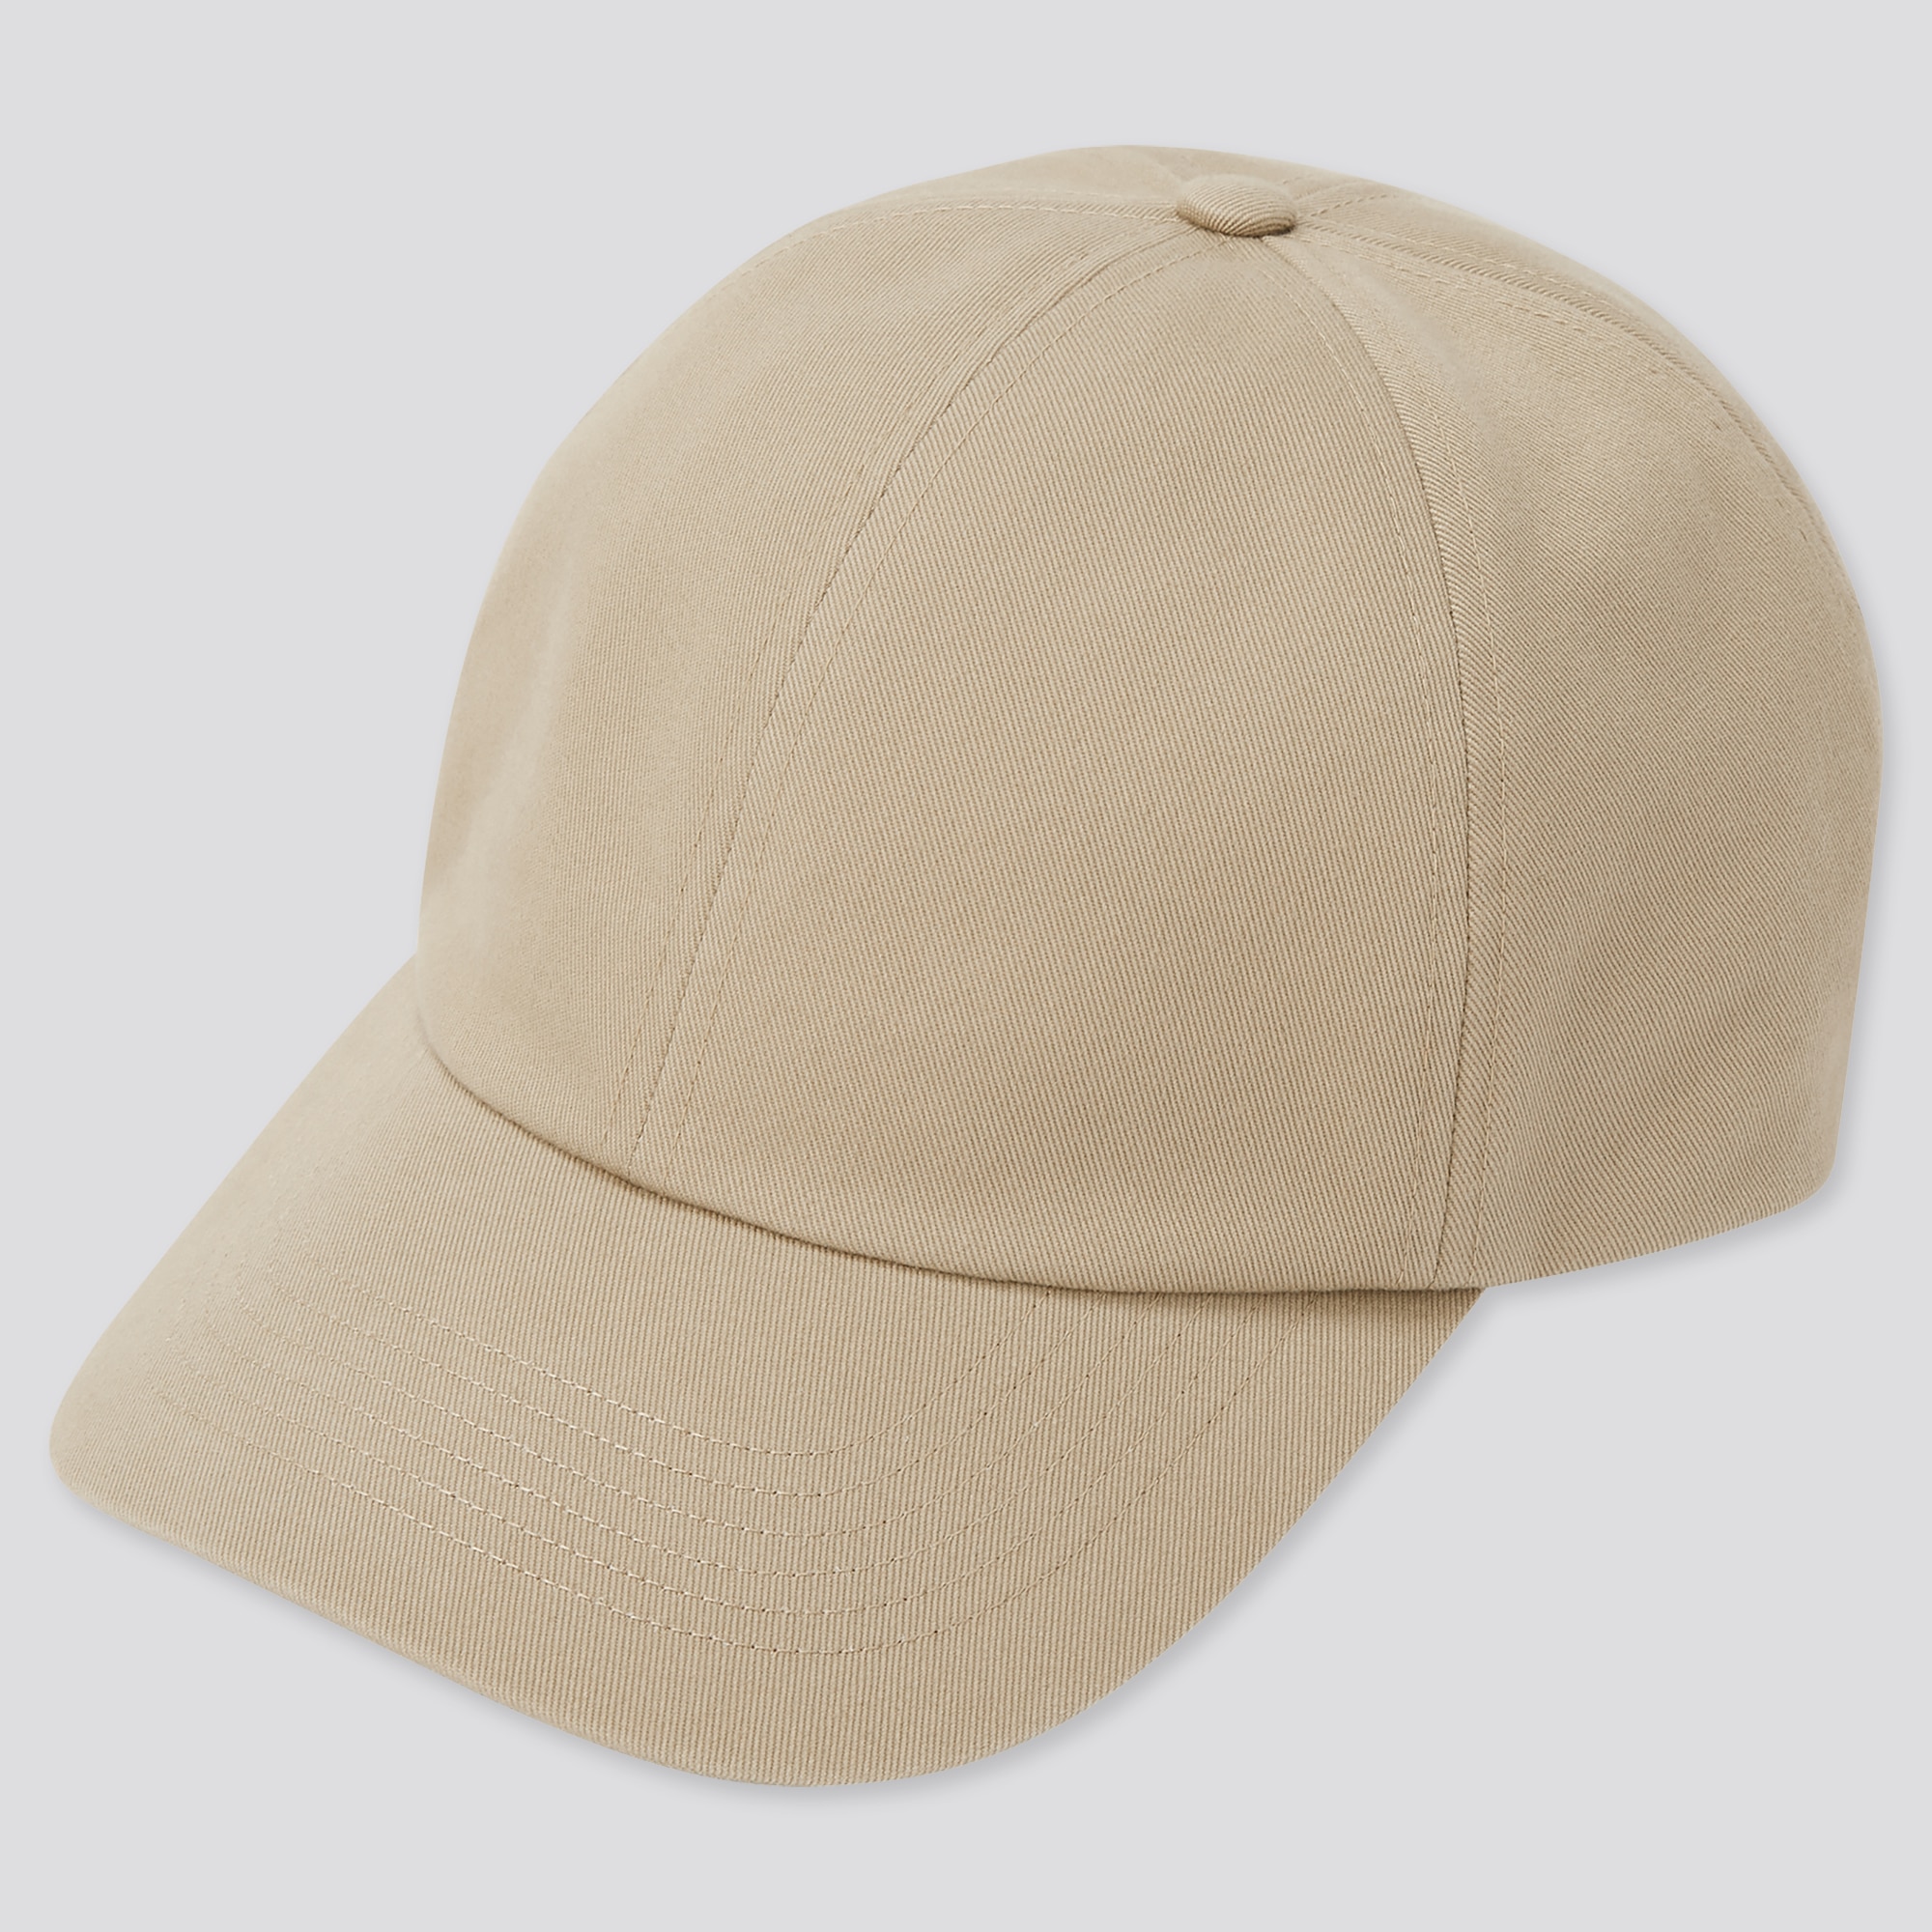 UV Protection Wide-Brimmed Hat